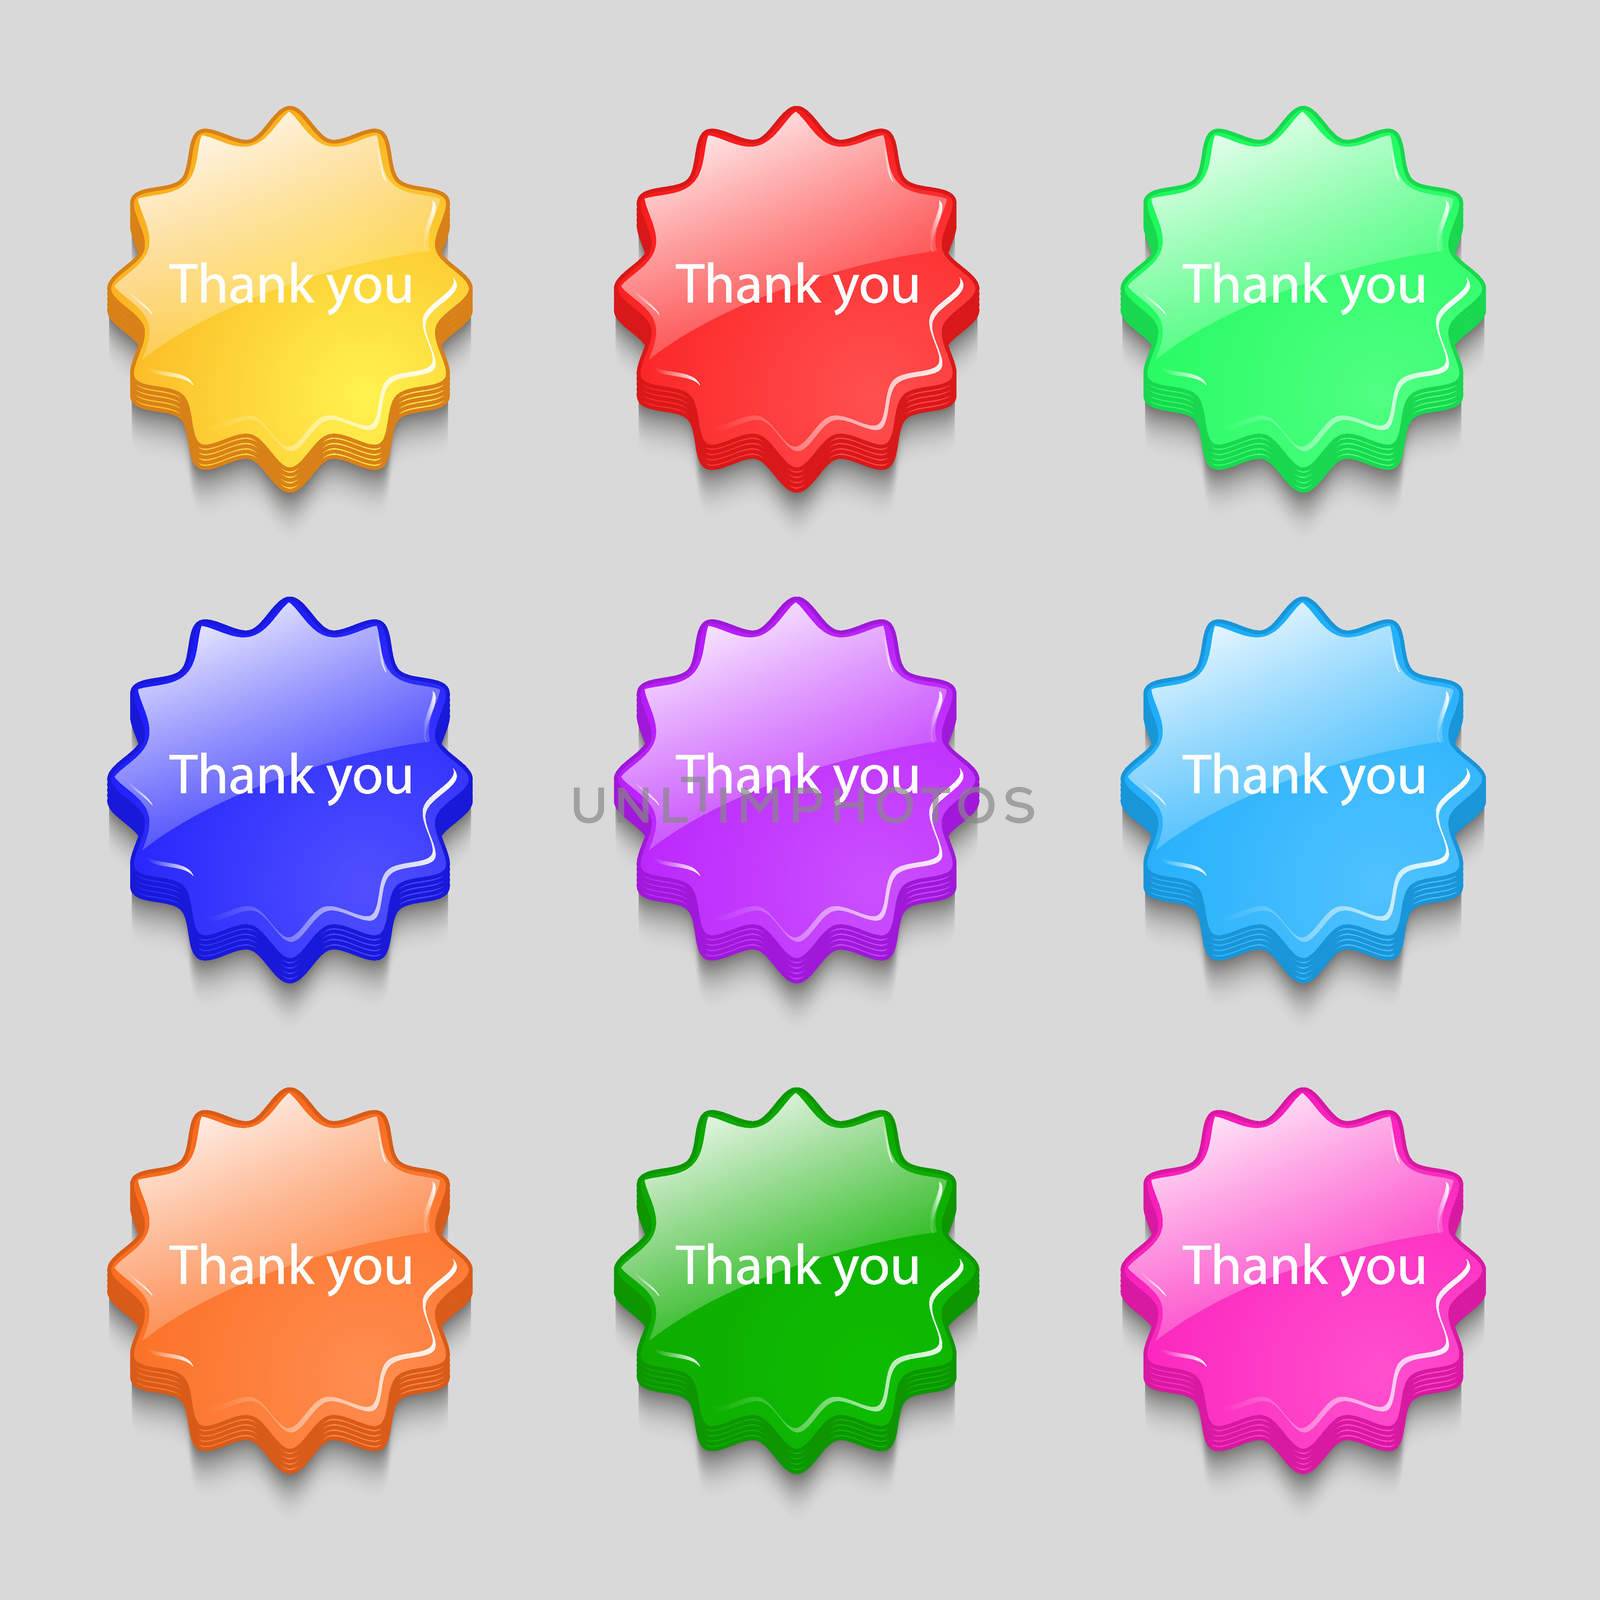 Thank you sign icon. Gratitude symbol. Symbols on nine wavy colourful buttons. illustration